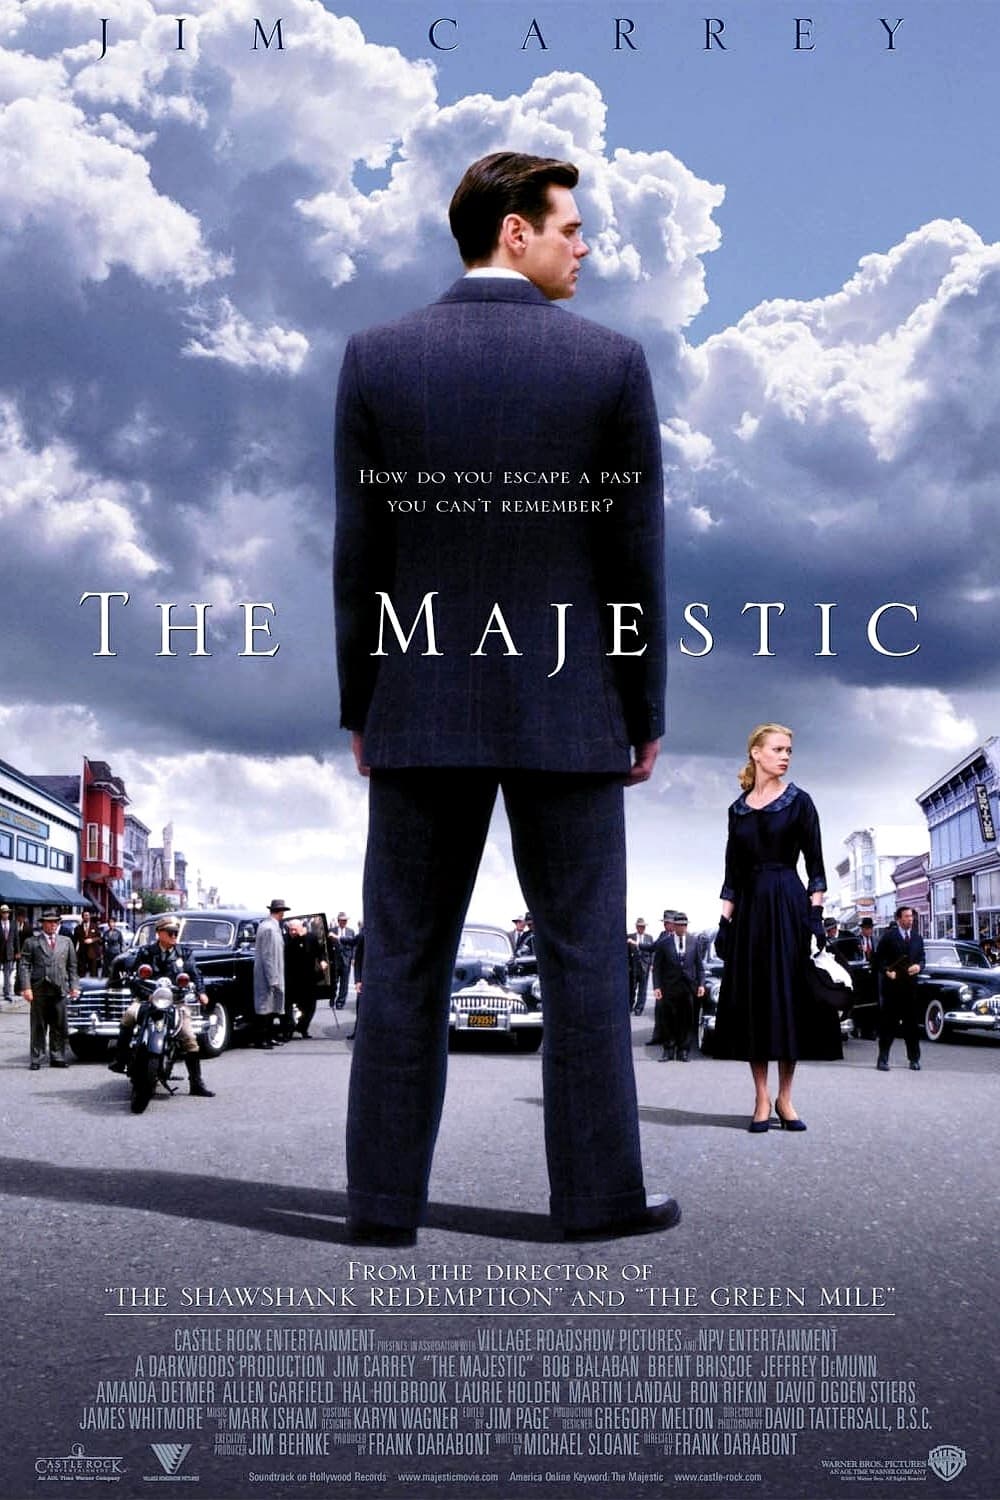 EN - The Majestic (2001) JIM CARREY